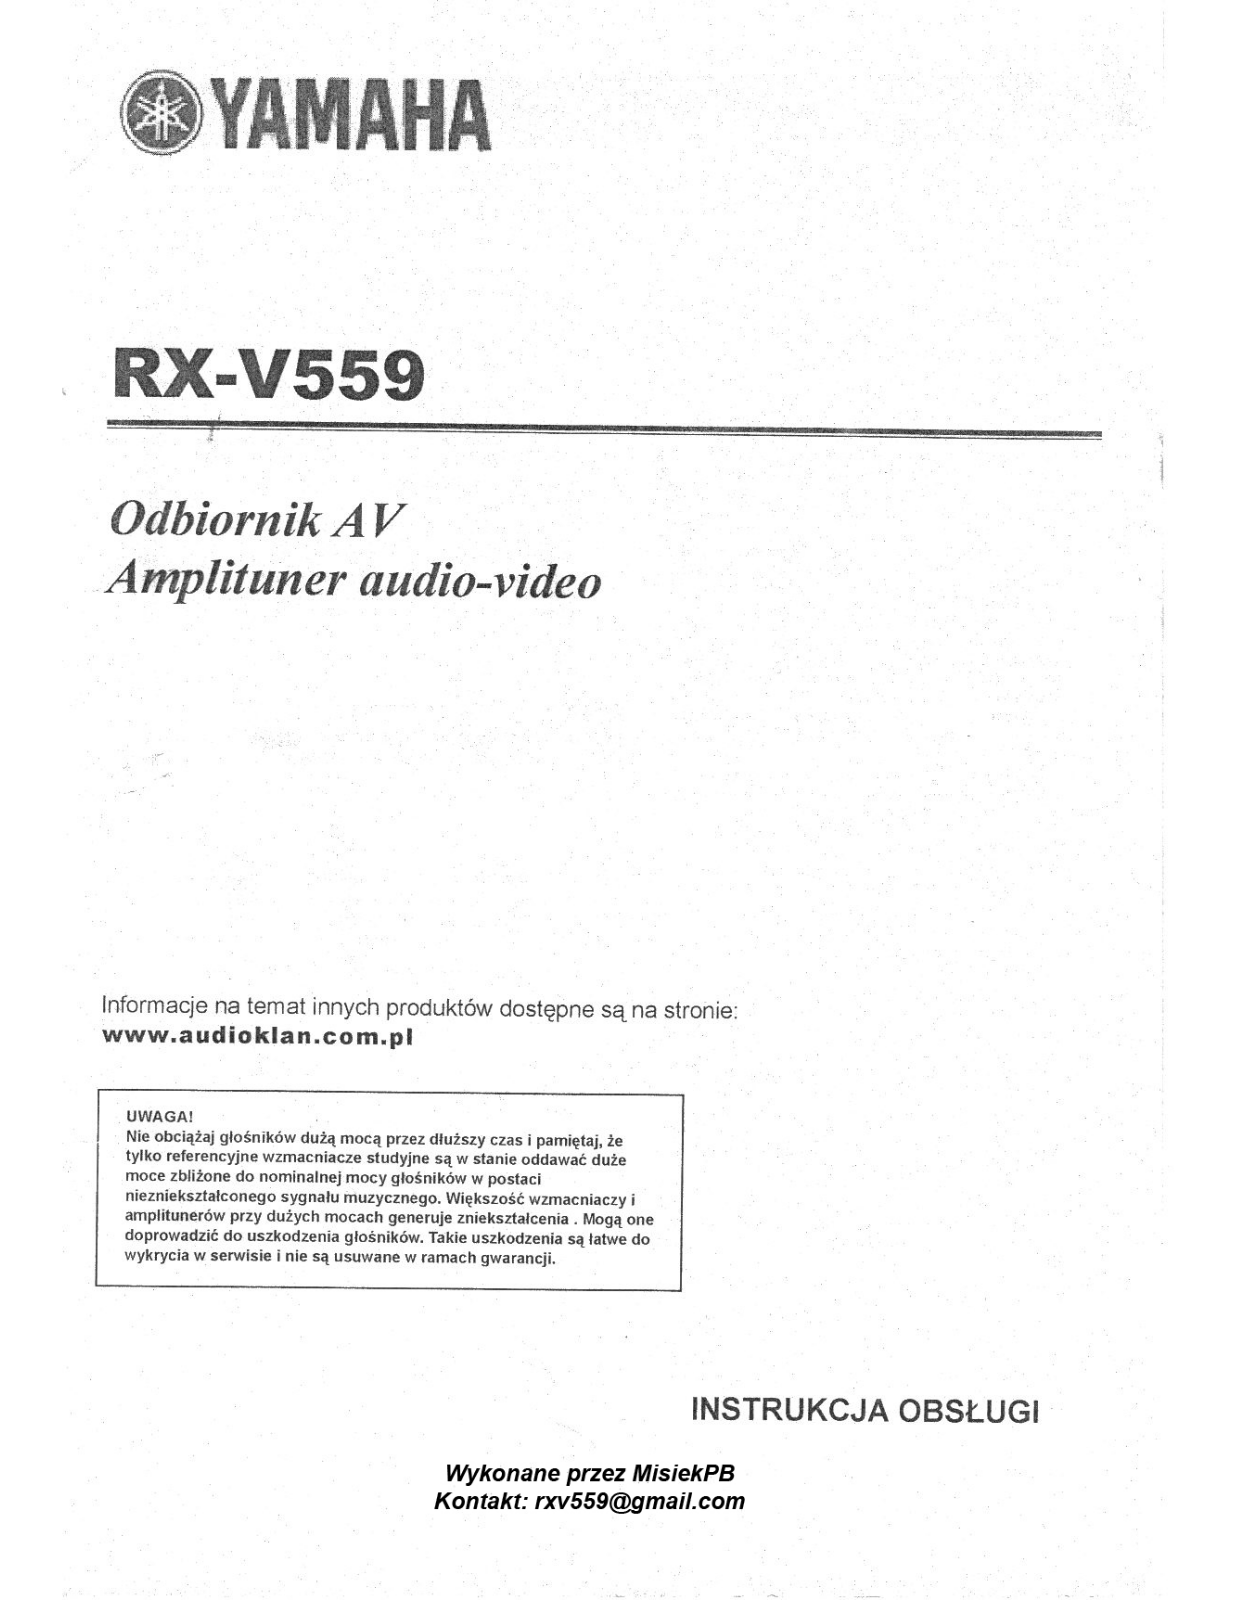 Yamaha RX-V559 User Manual